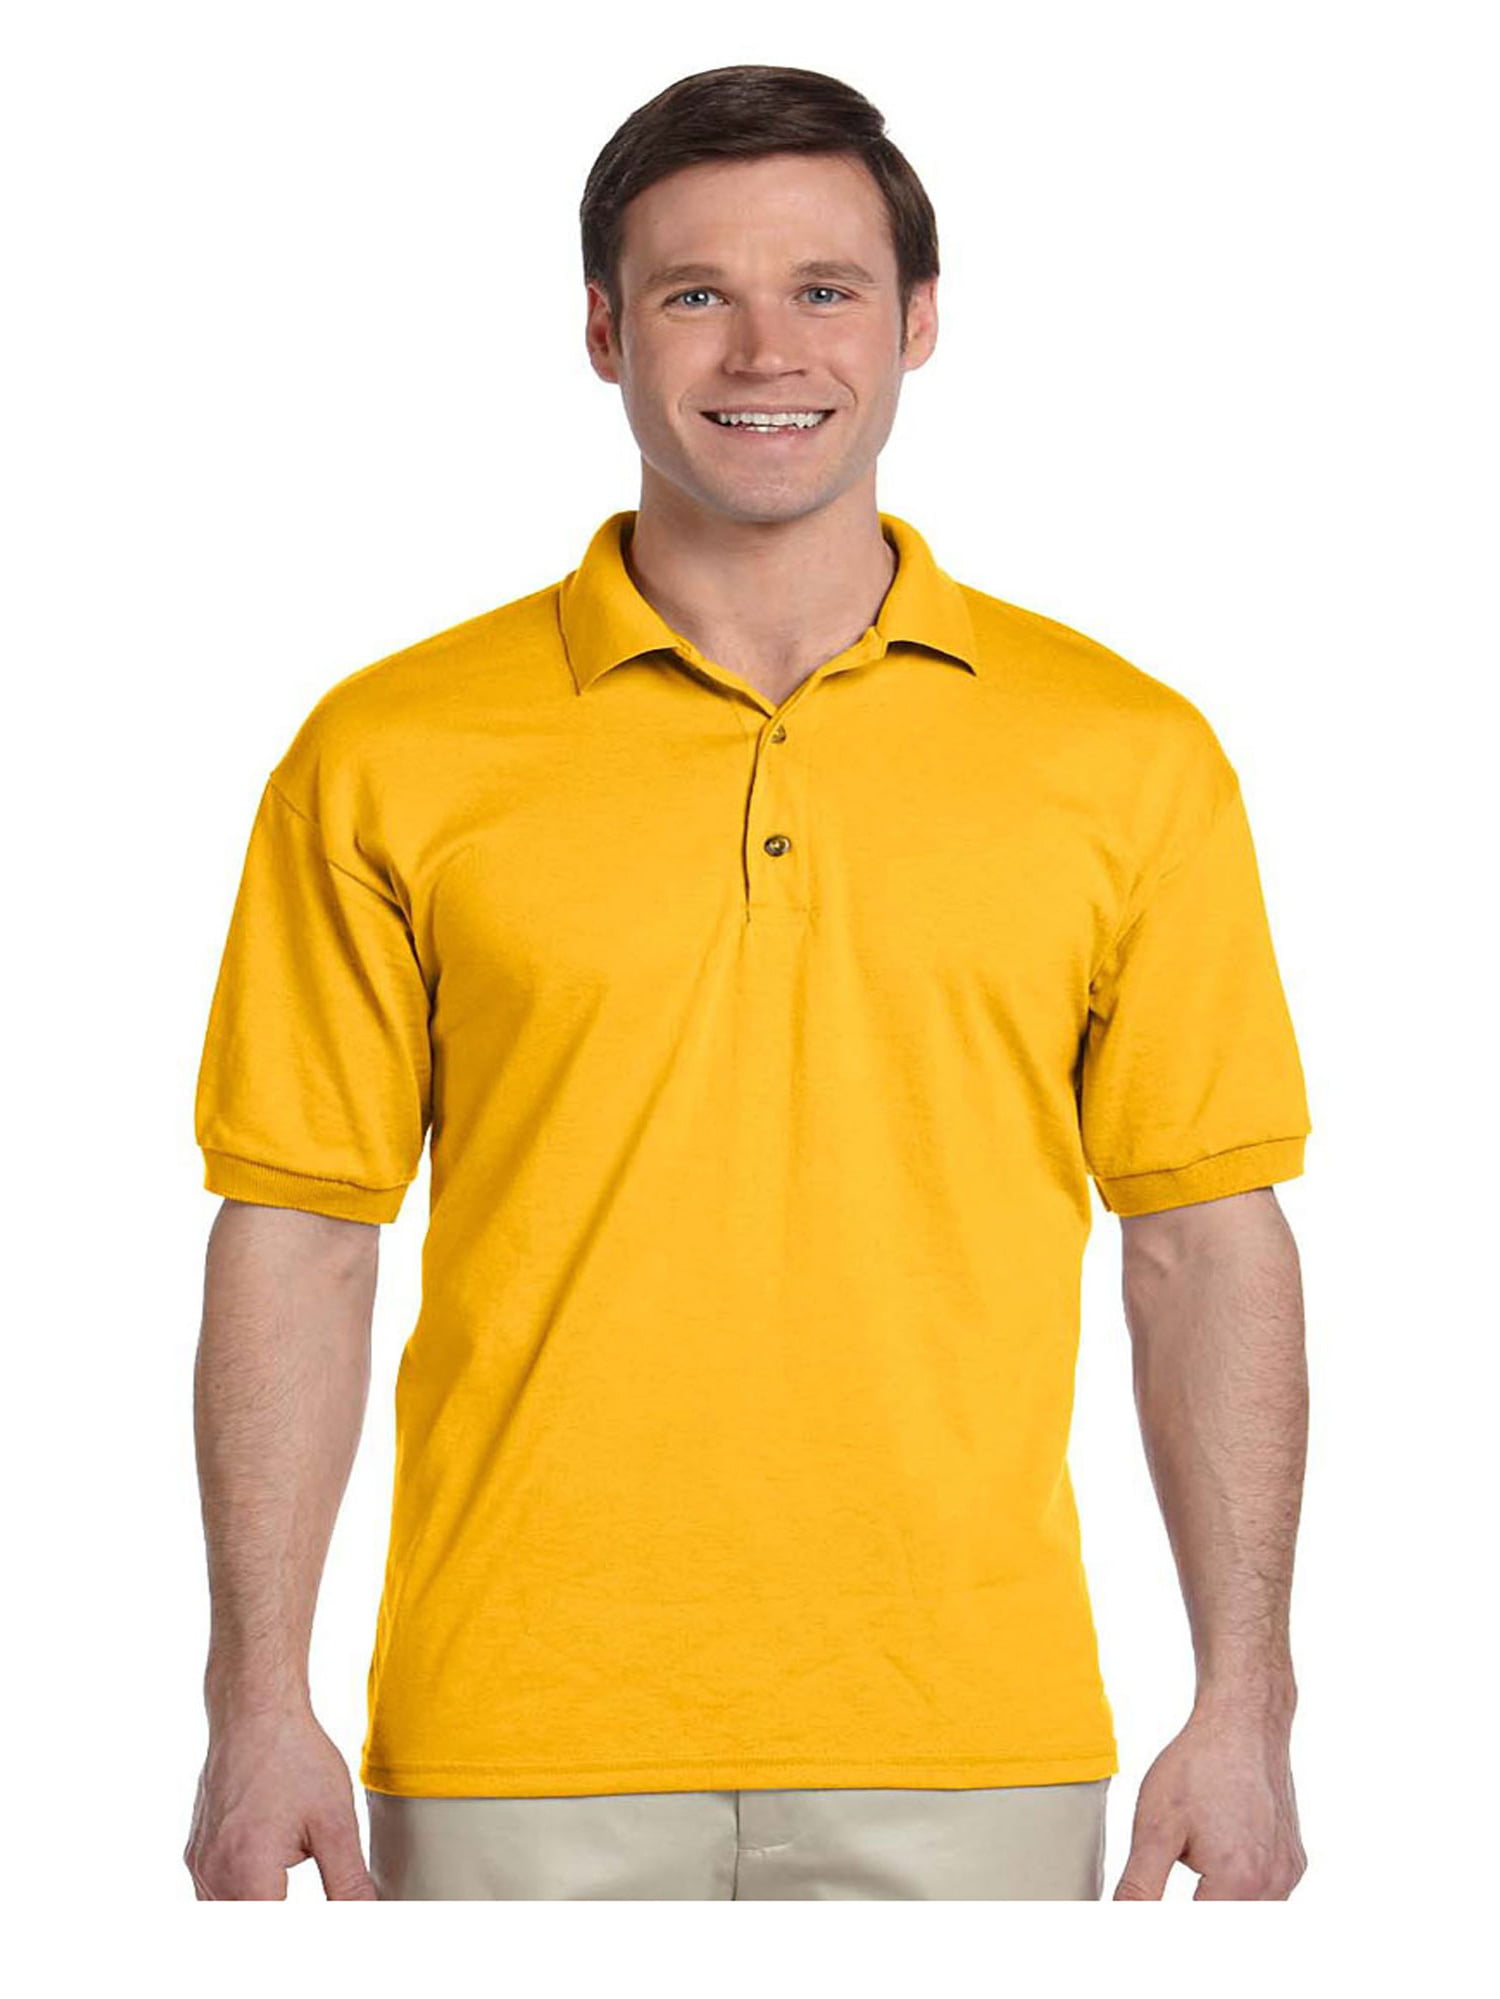 Gildan Men's Contoured Dryblend Preshrunk Polo Shirt, Style G8800